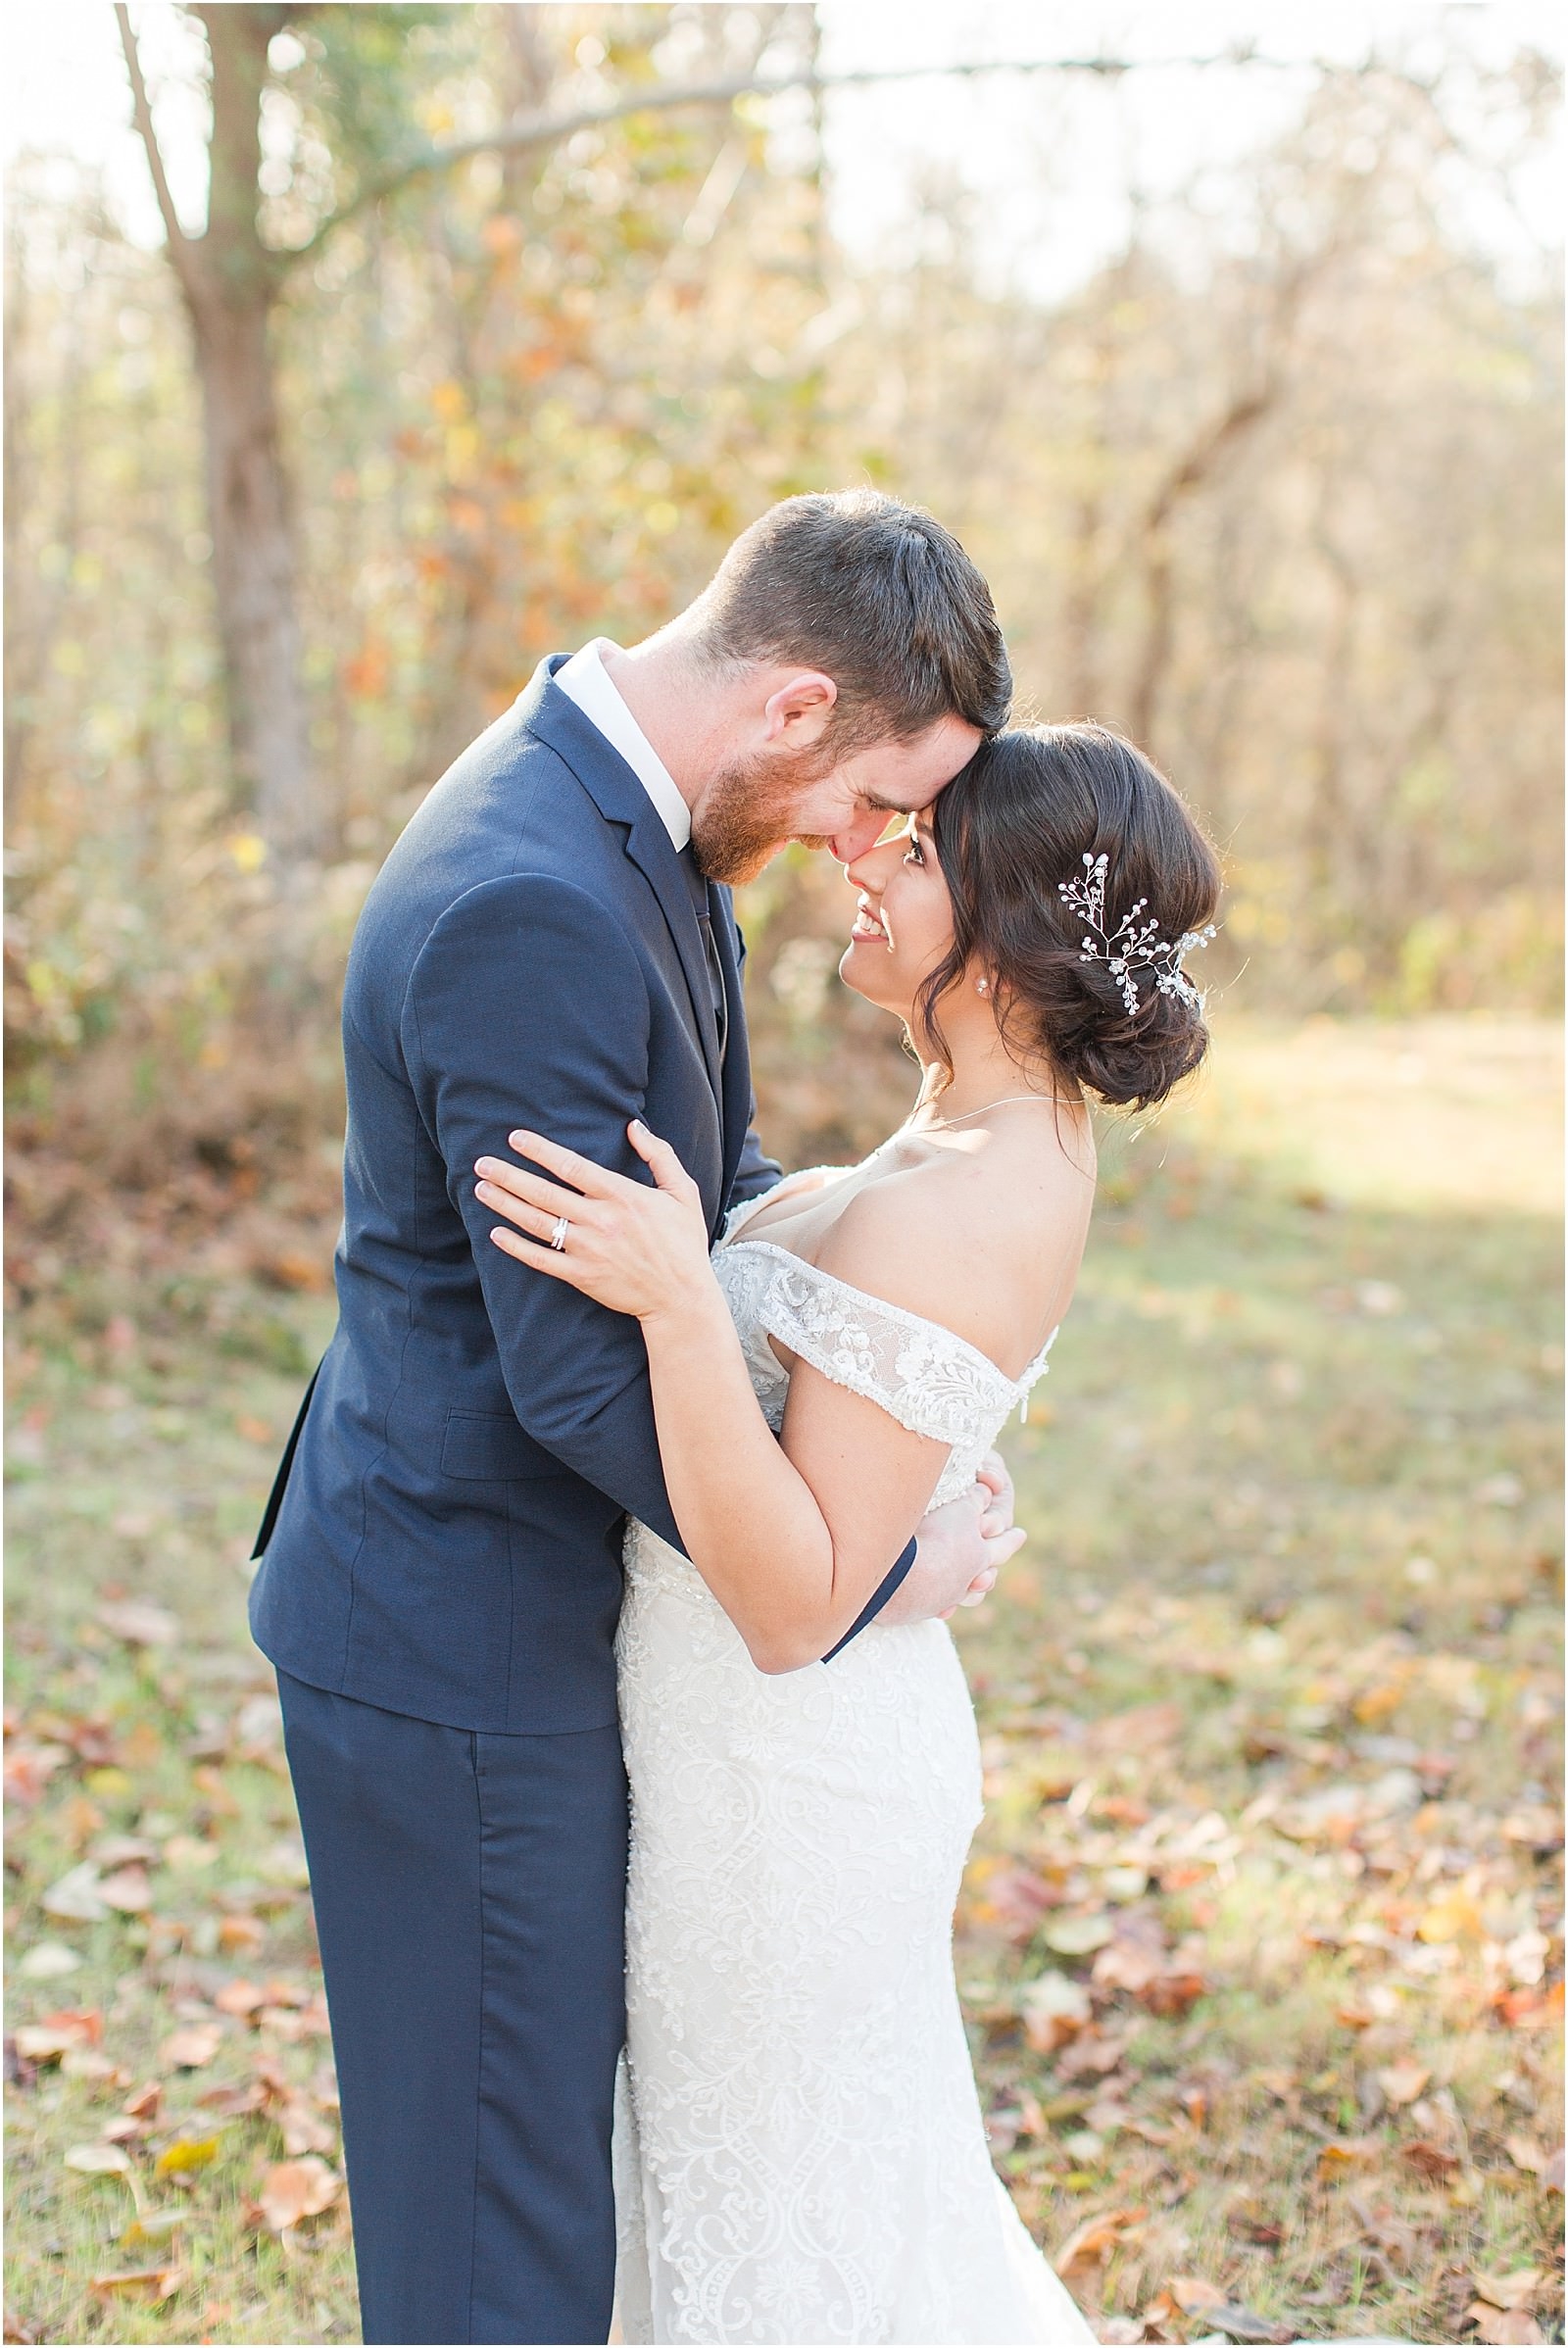 Walker and Alyssa's intimate fall wedding in Southern Indiana. | Wedding Photography | The Corner House Wedding | Southern Indiana Wedding | #fallwedding #intimatewedding | 034.jpg